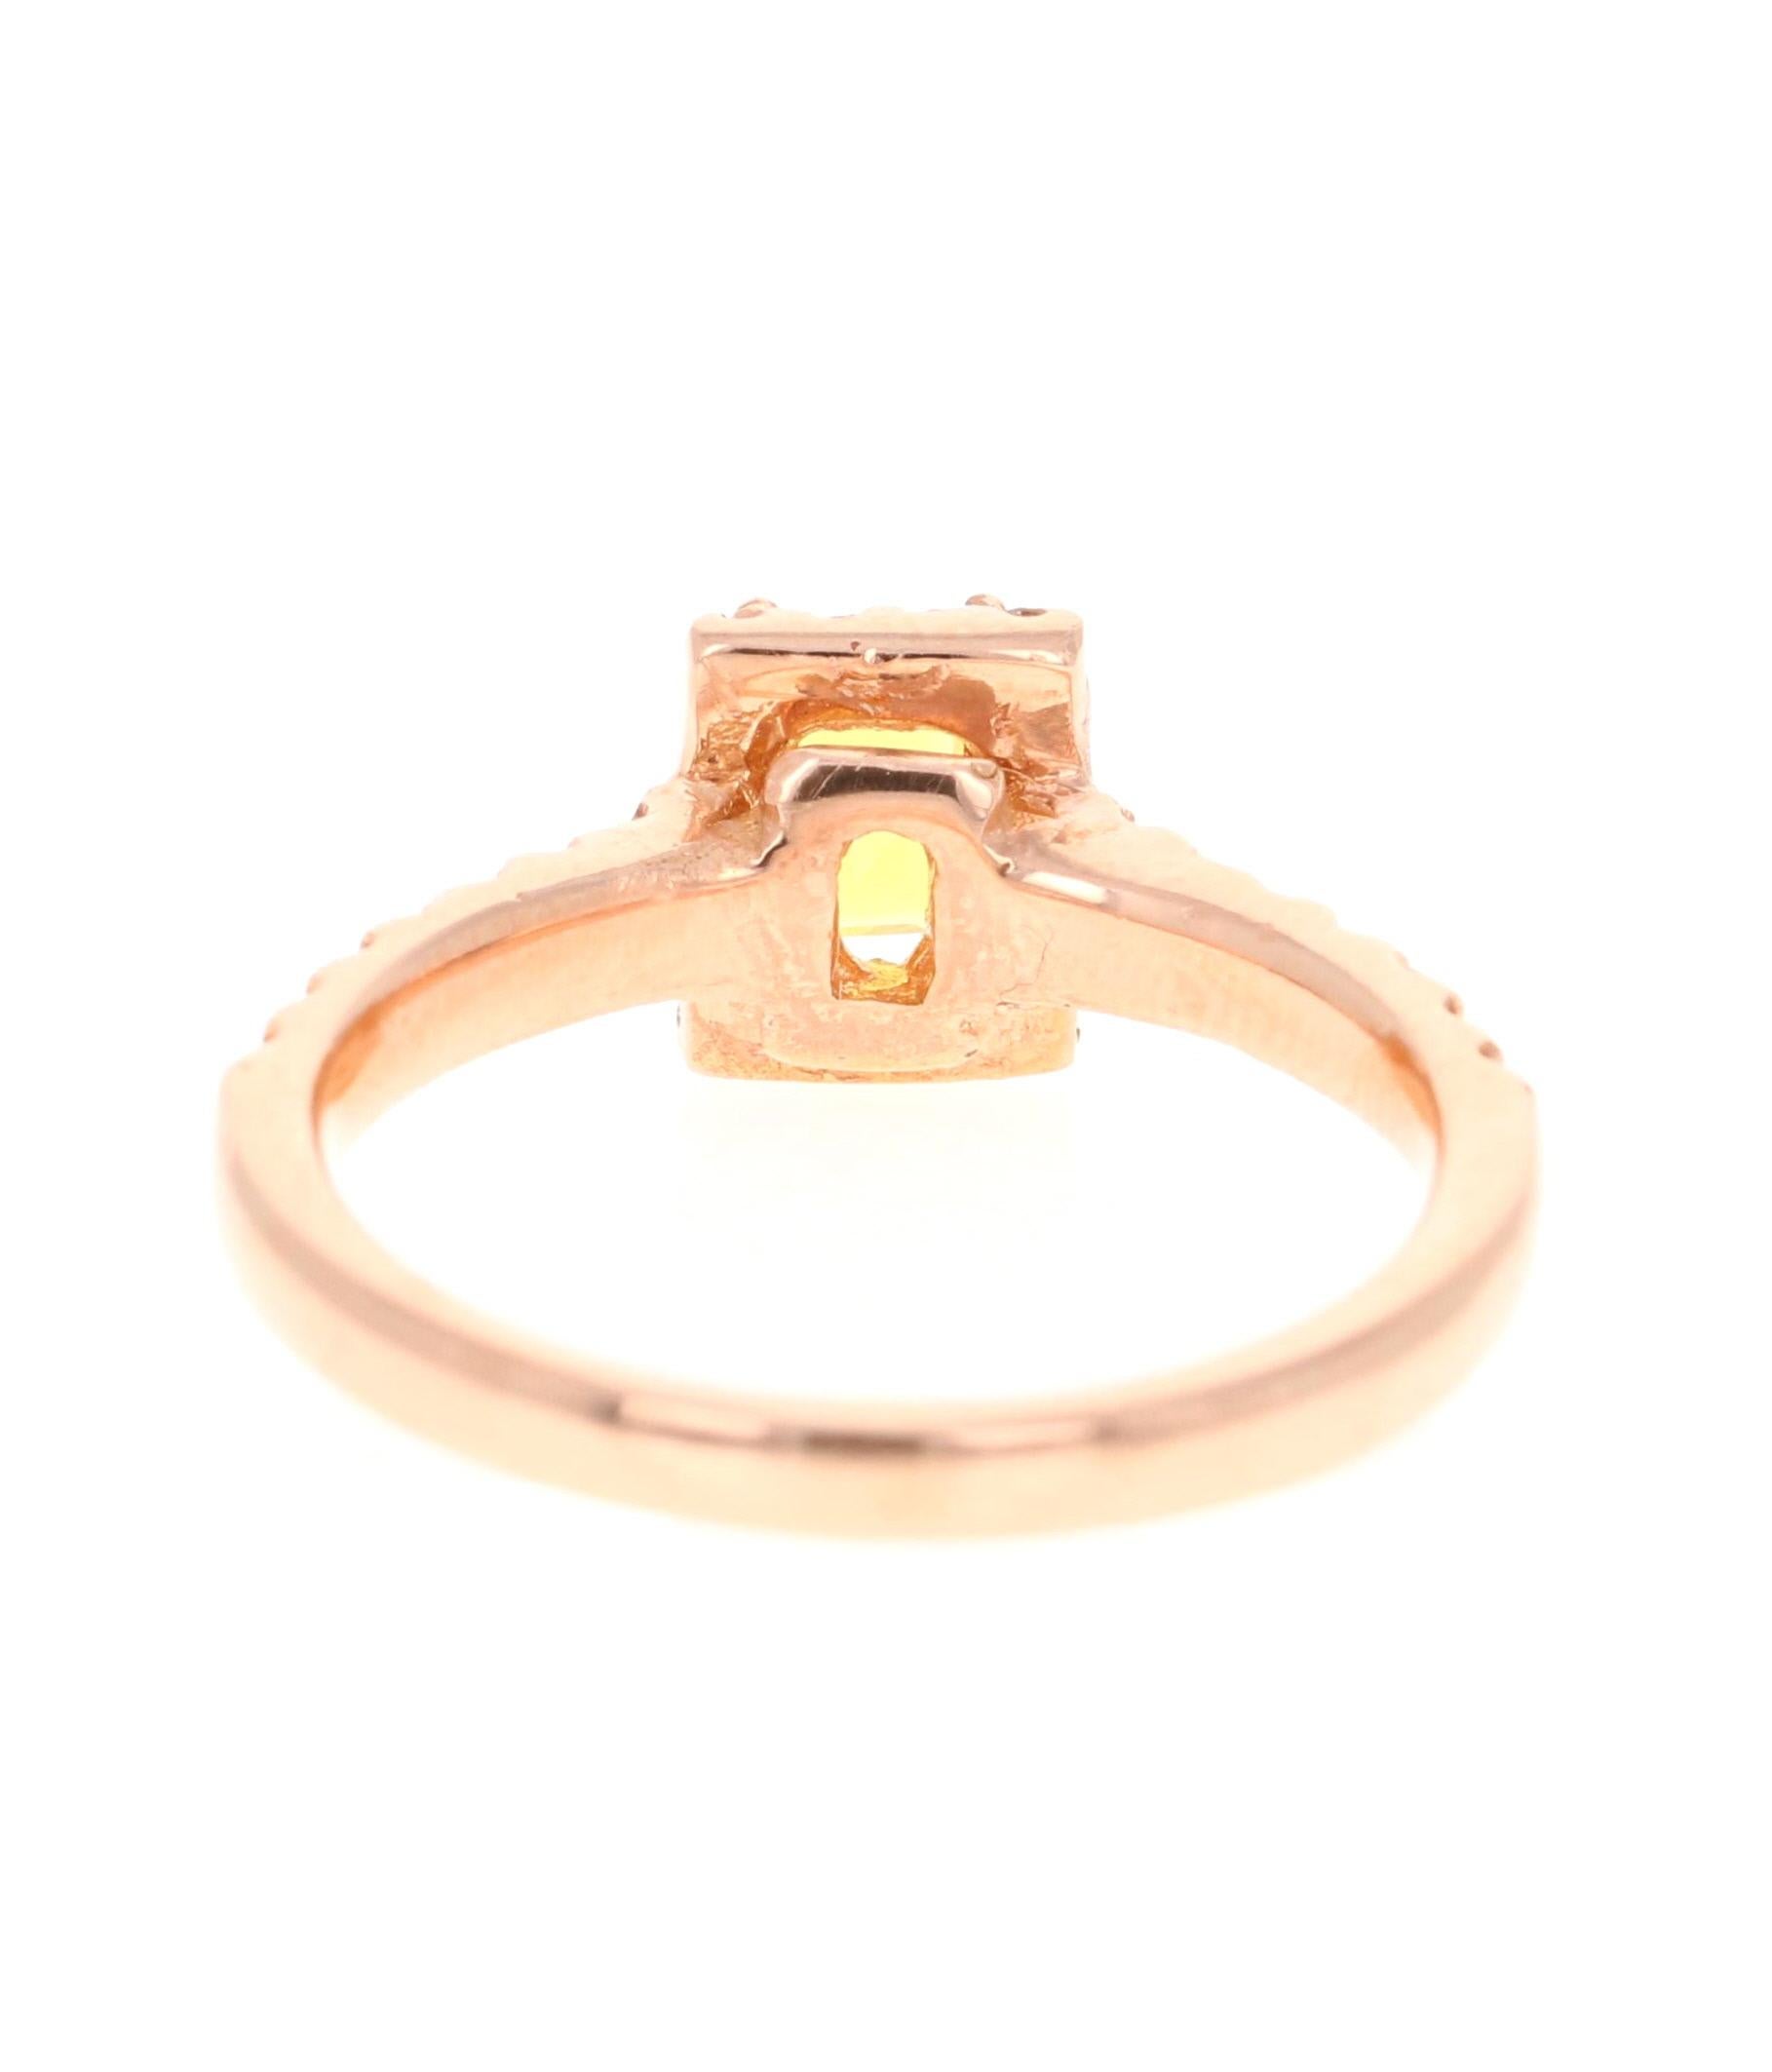 Emerald Cut 1.16 Carat Yellow Sapphire and Diamond 18 Karat Rose Gold Ring For Sale